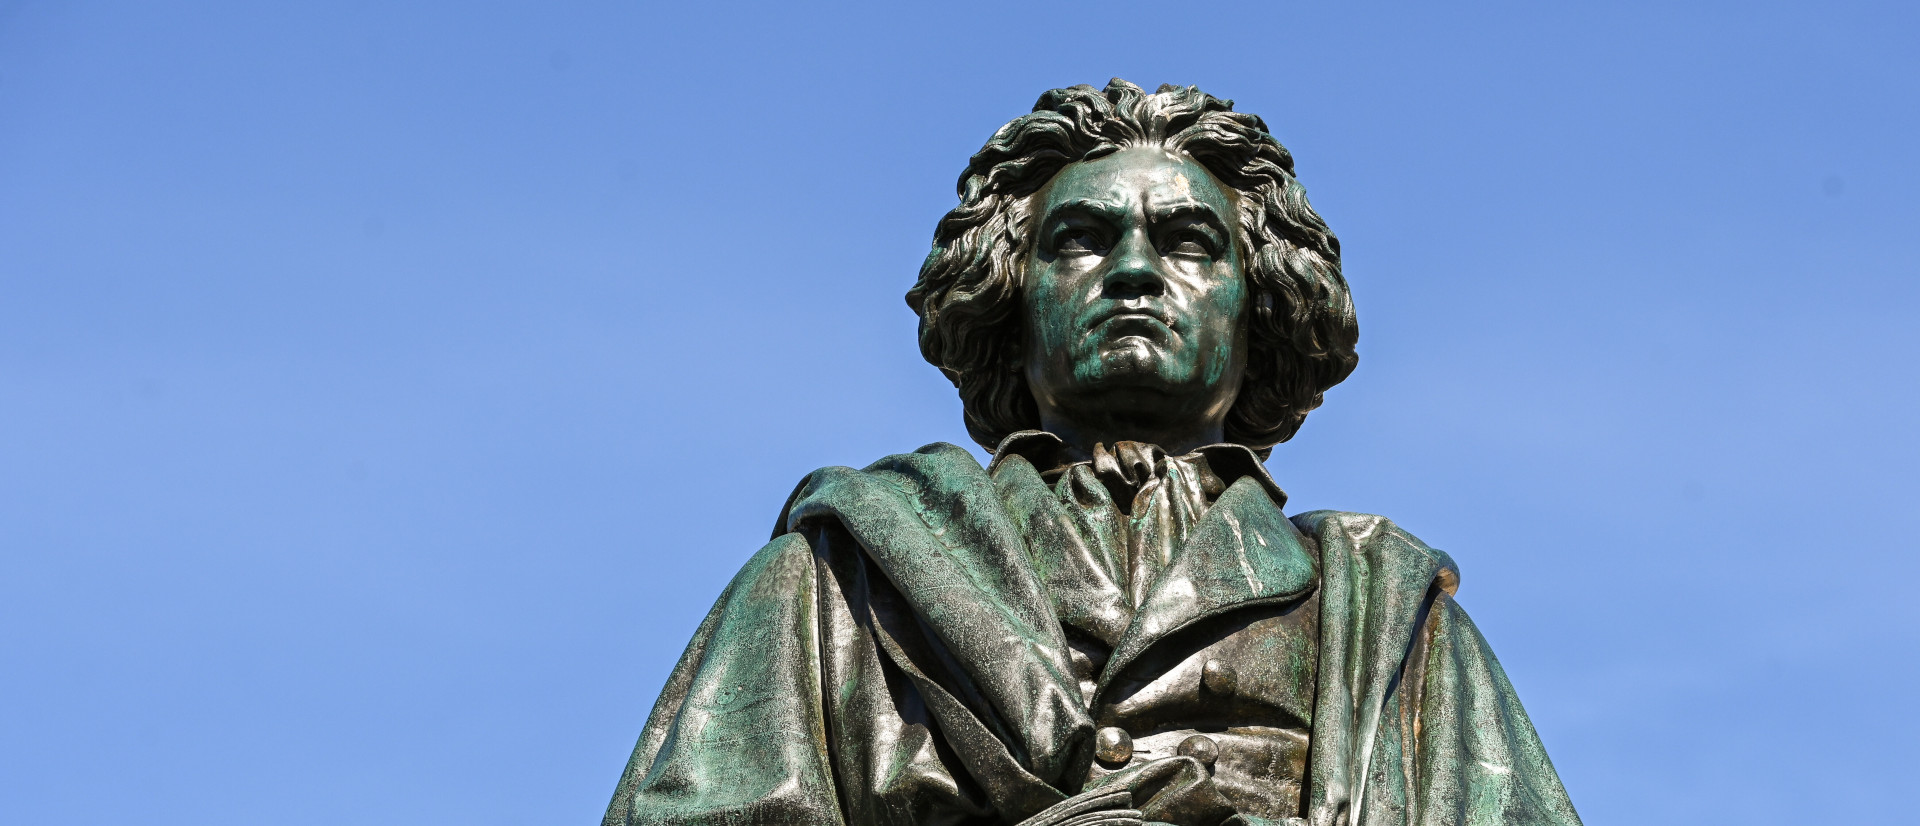 Frisch renovierte Statue des Komponisten Ludwig van Beethoven vor blauem Himmel in Bonn am 12. Juli 2022.